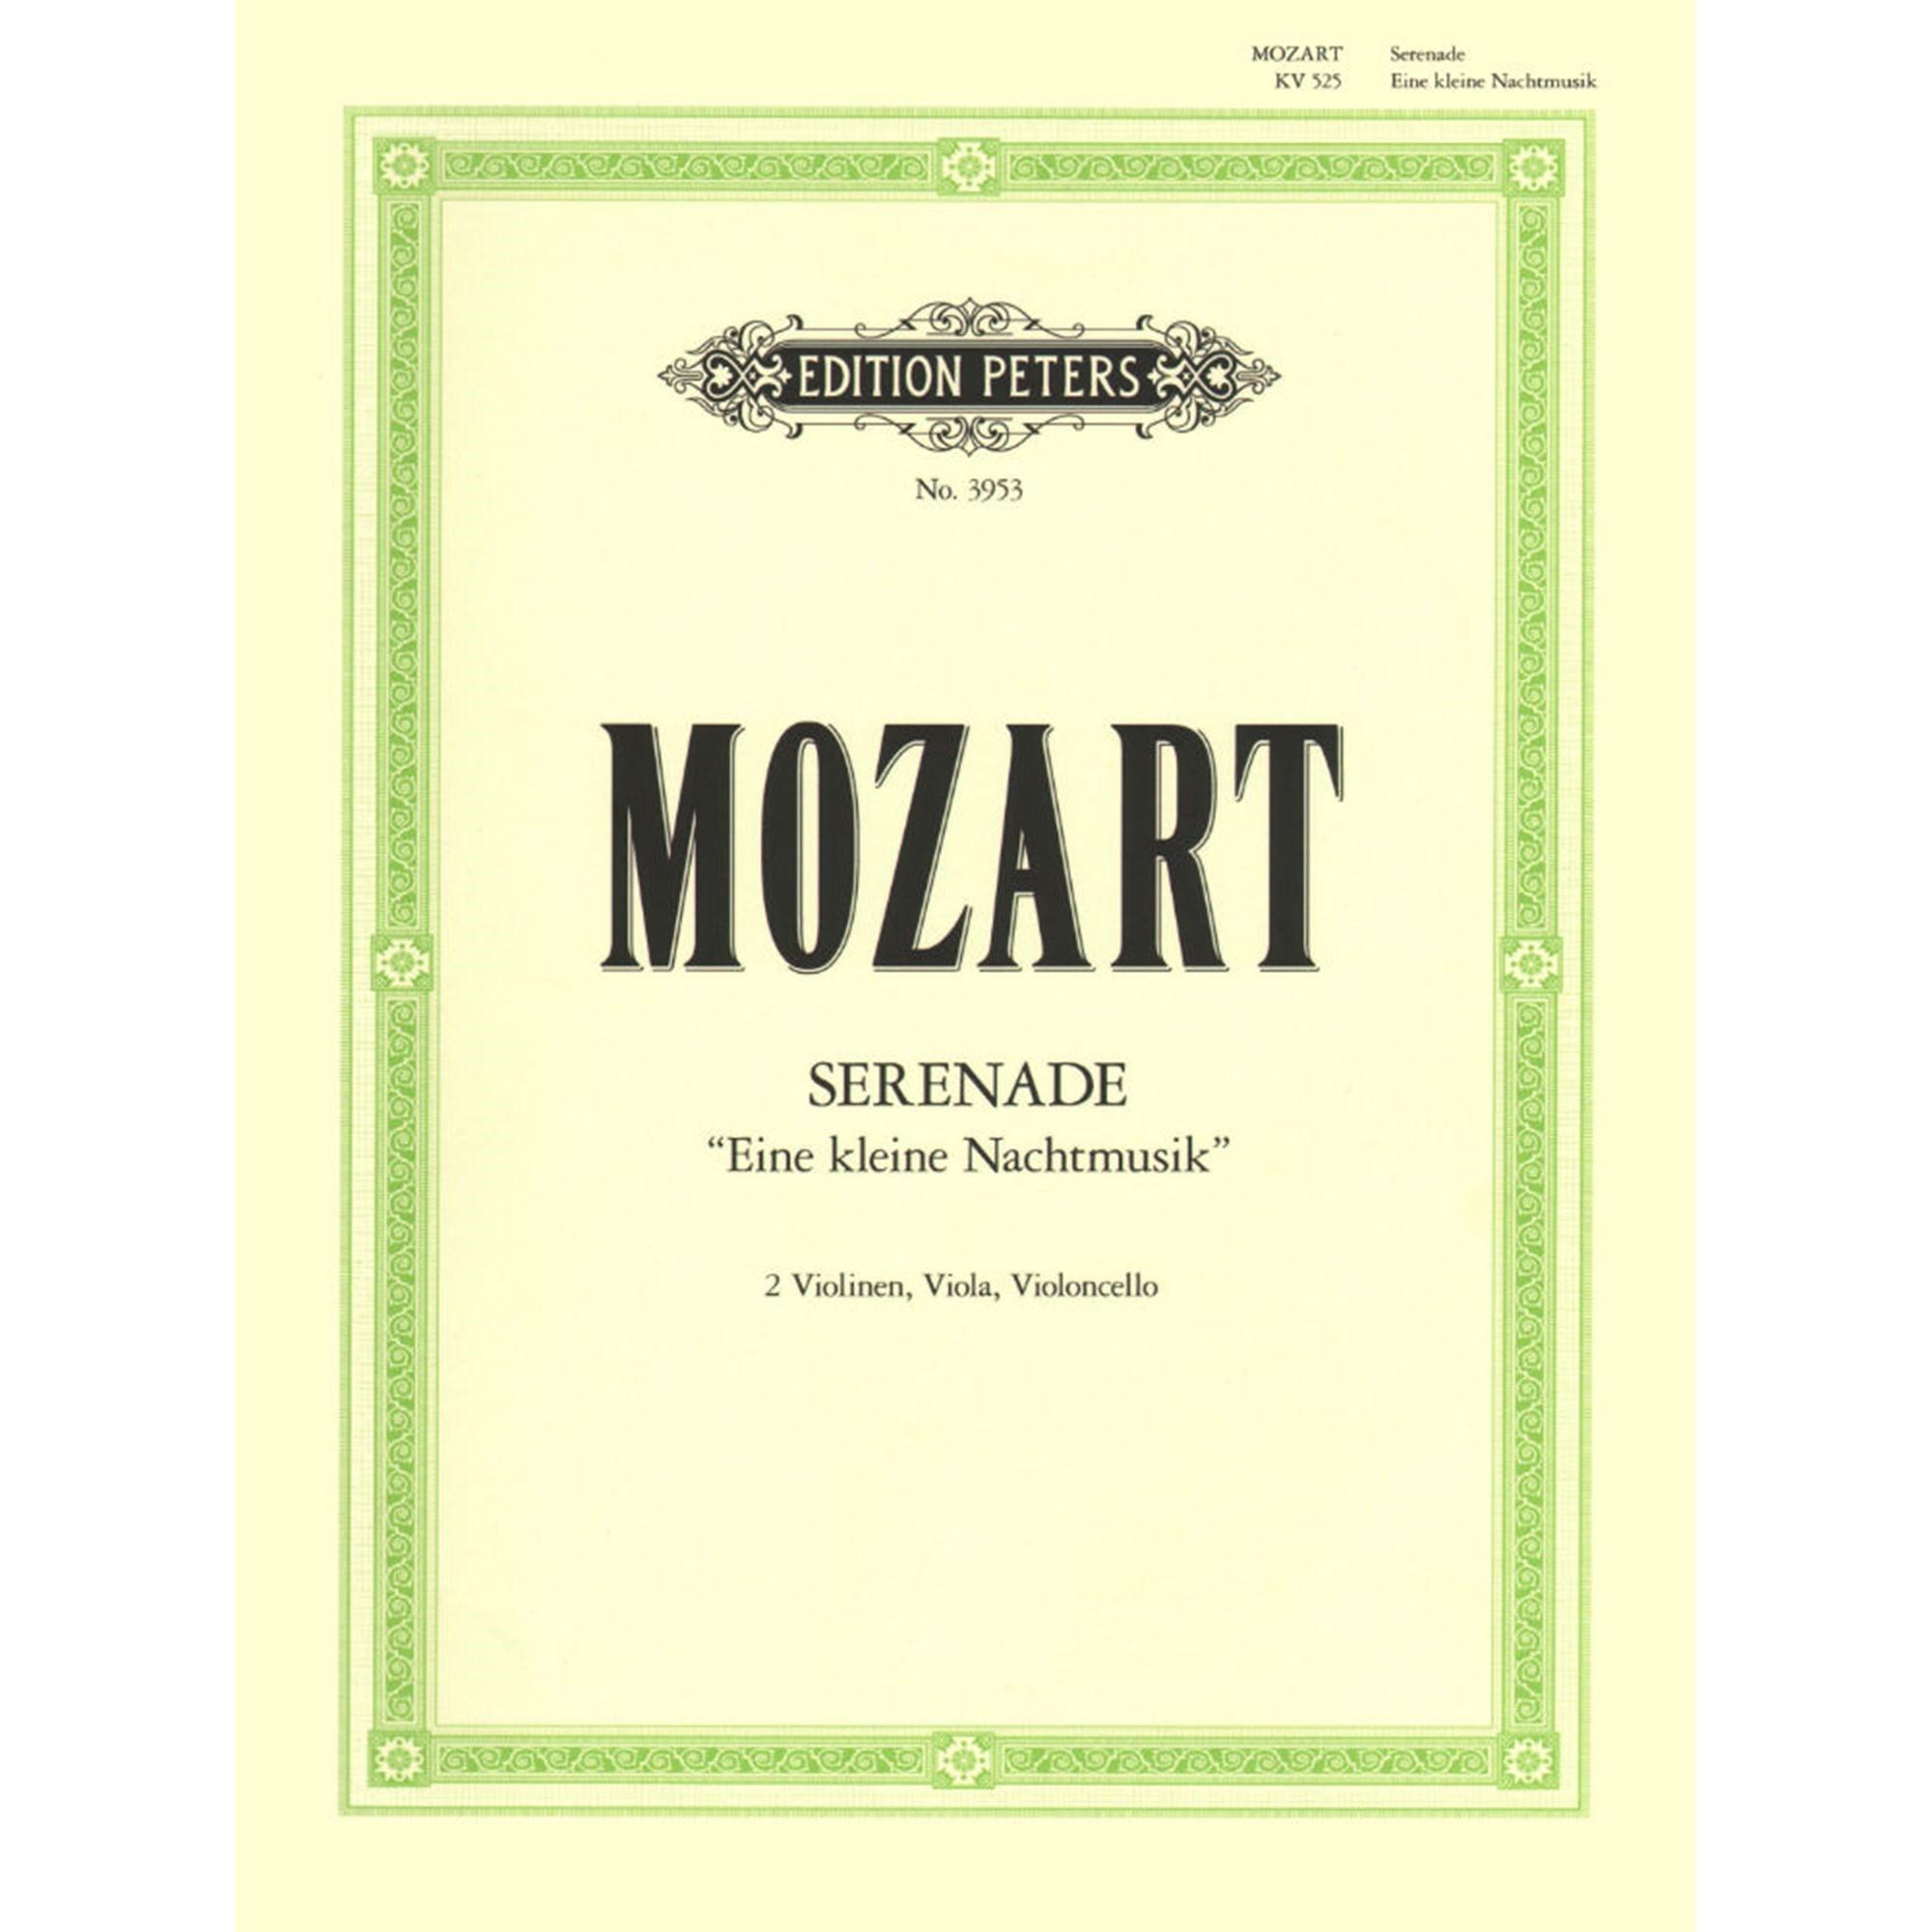 Mozart Eine kleine Nachtmusik Serenade Serenade 2 Violinen, Viola, Violoncello - Edition Peters